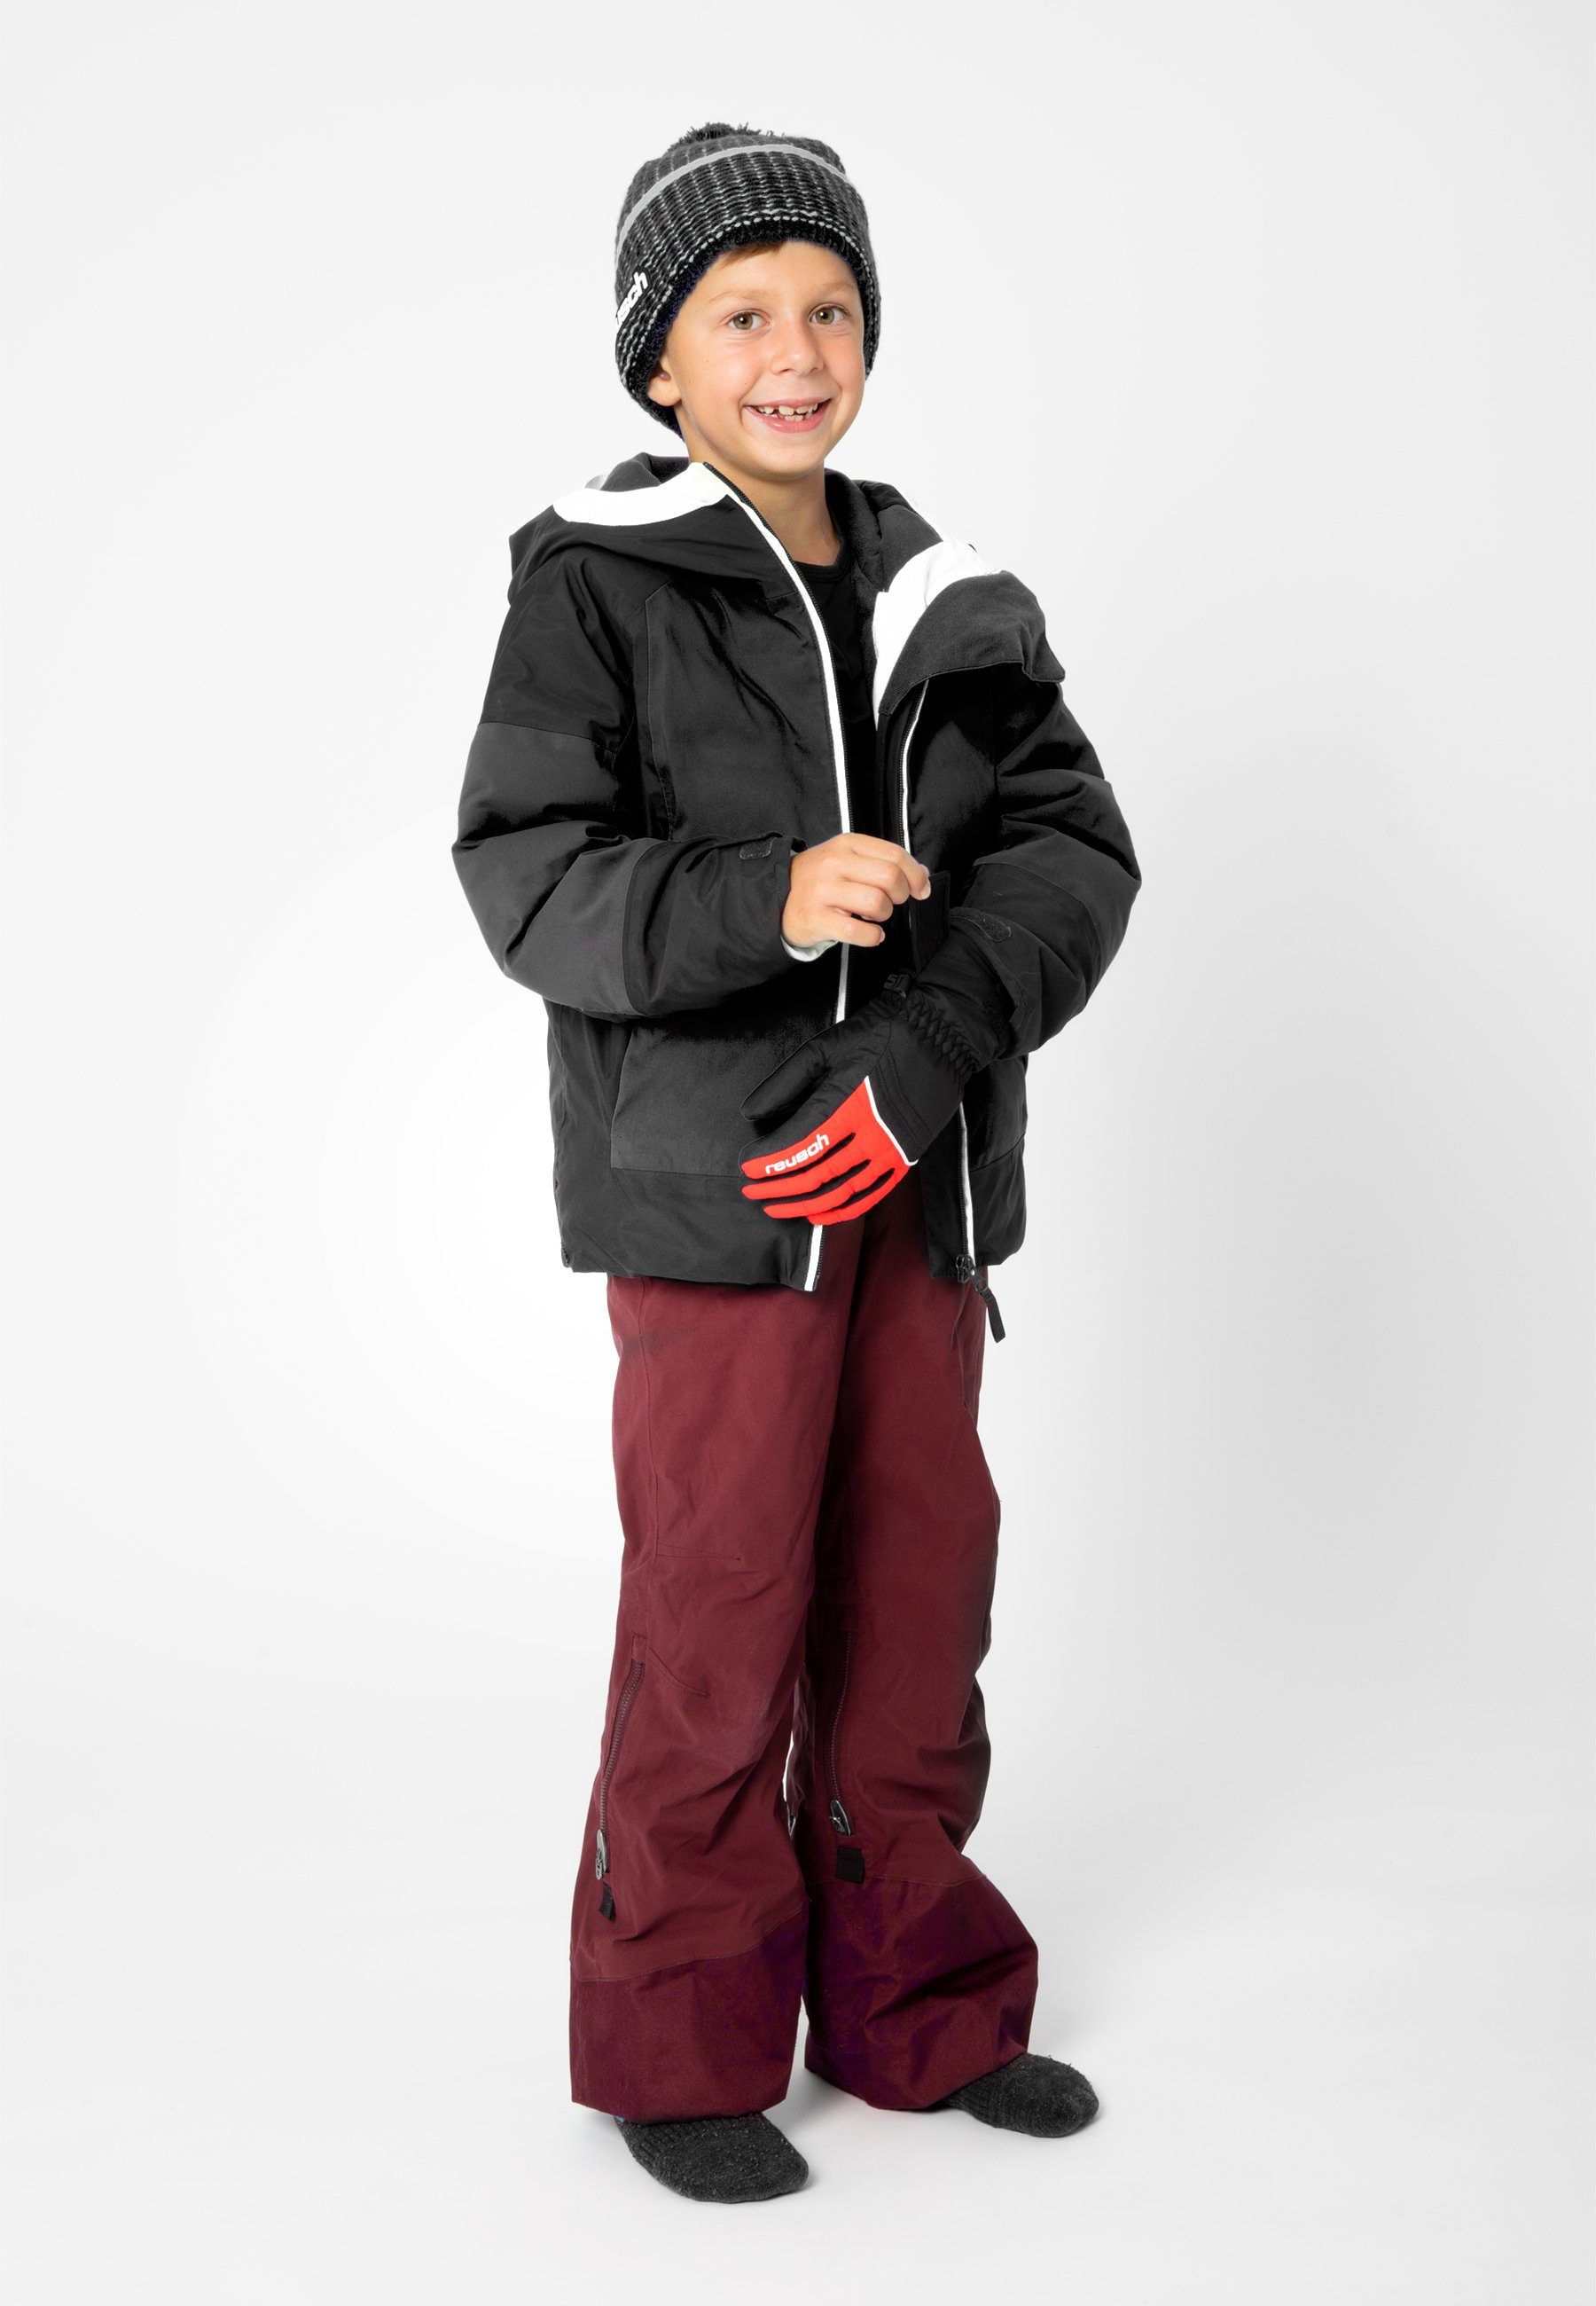 rot-schwarz Reusch Skihandschuhe mit Teddy GORE-TEX wasserdichter Funktionsmembran